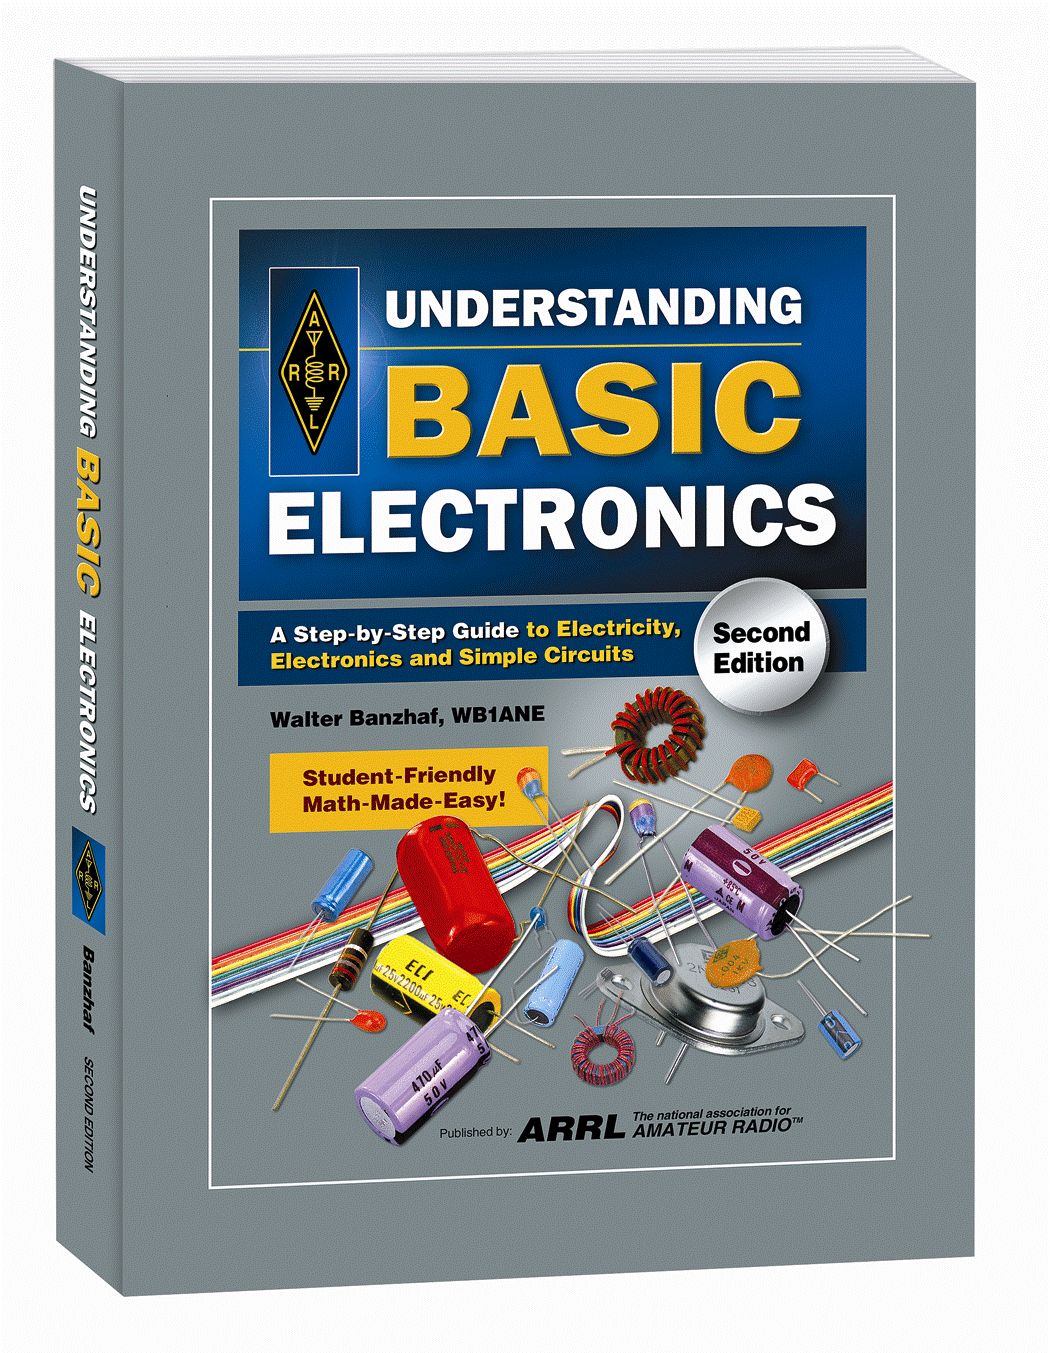 Arrl Introduces Understanding Basic Electronics Second Edition